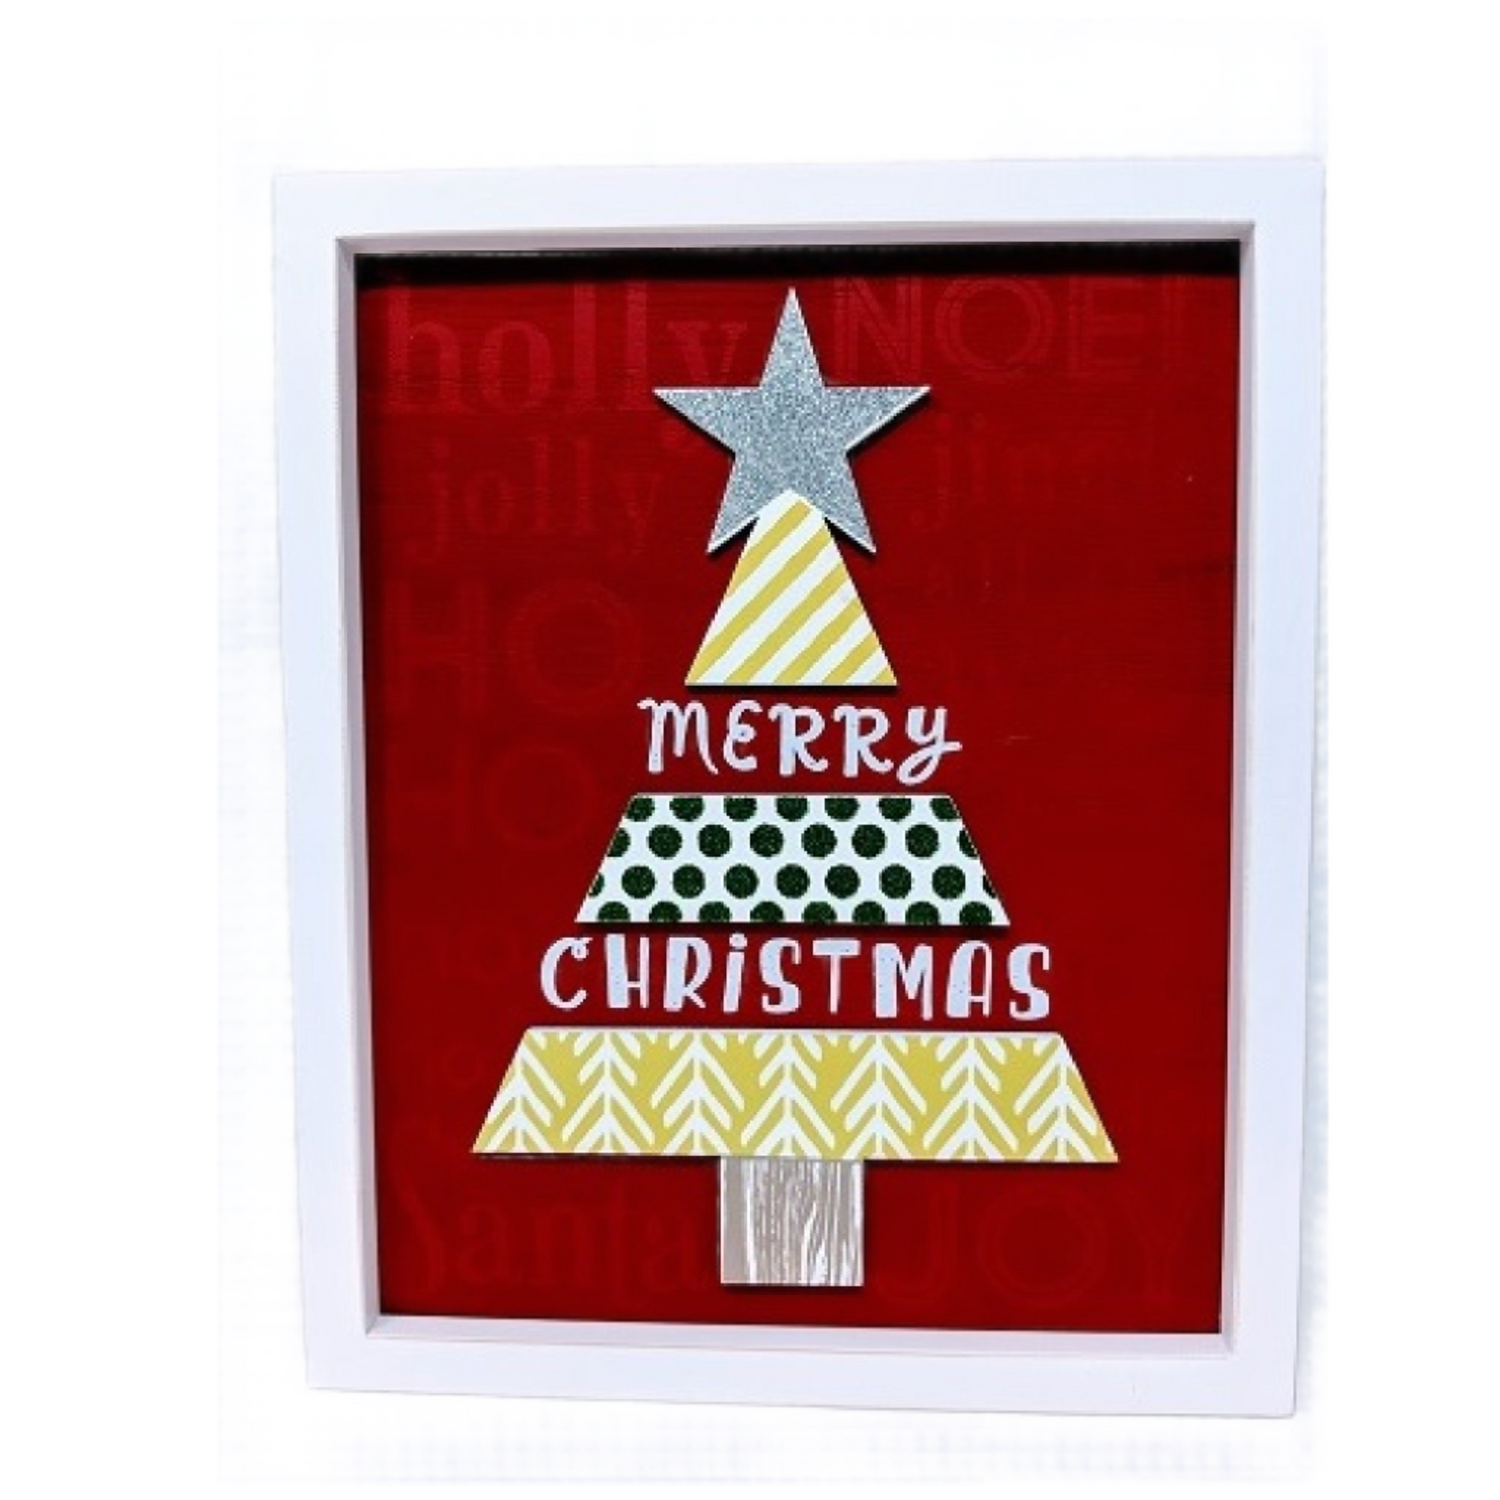 Malden Merry Christmas Wood Plaque Box Sign